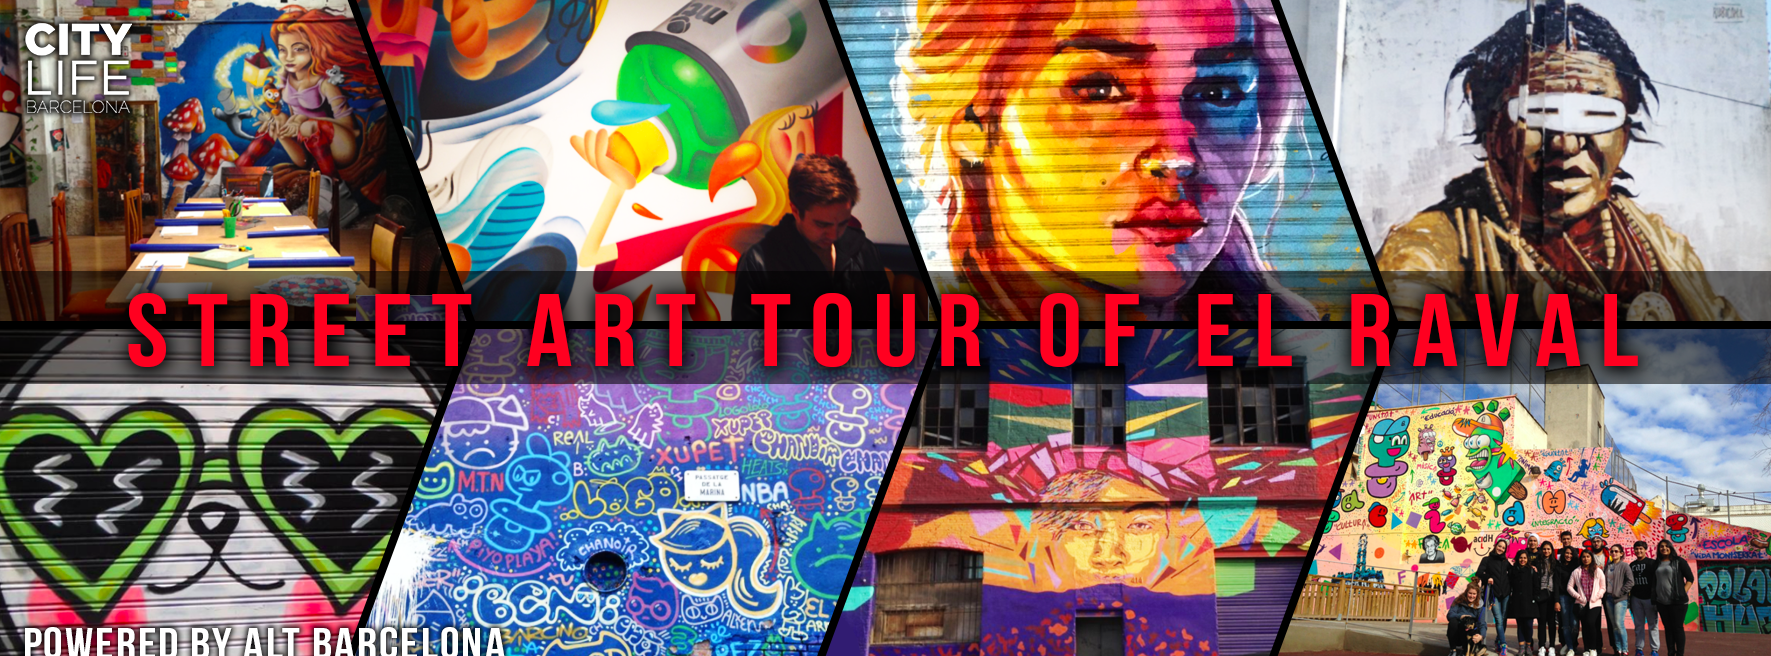 MEET & EXPLORE - Street Art Tour of El Raval!